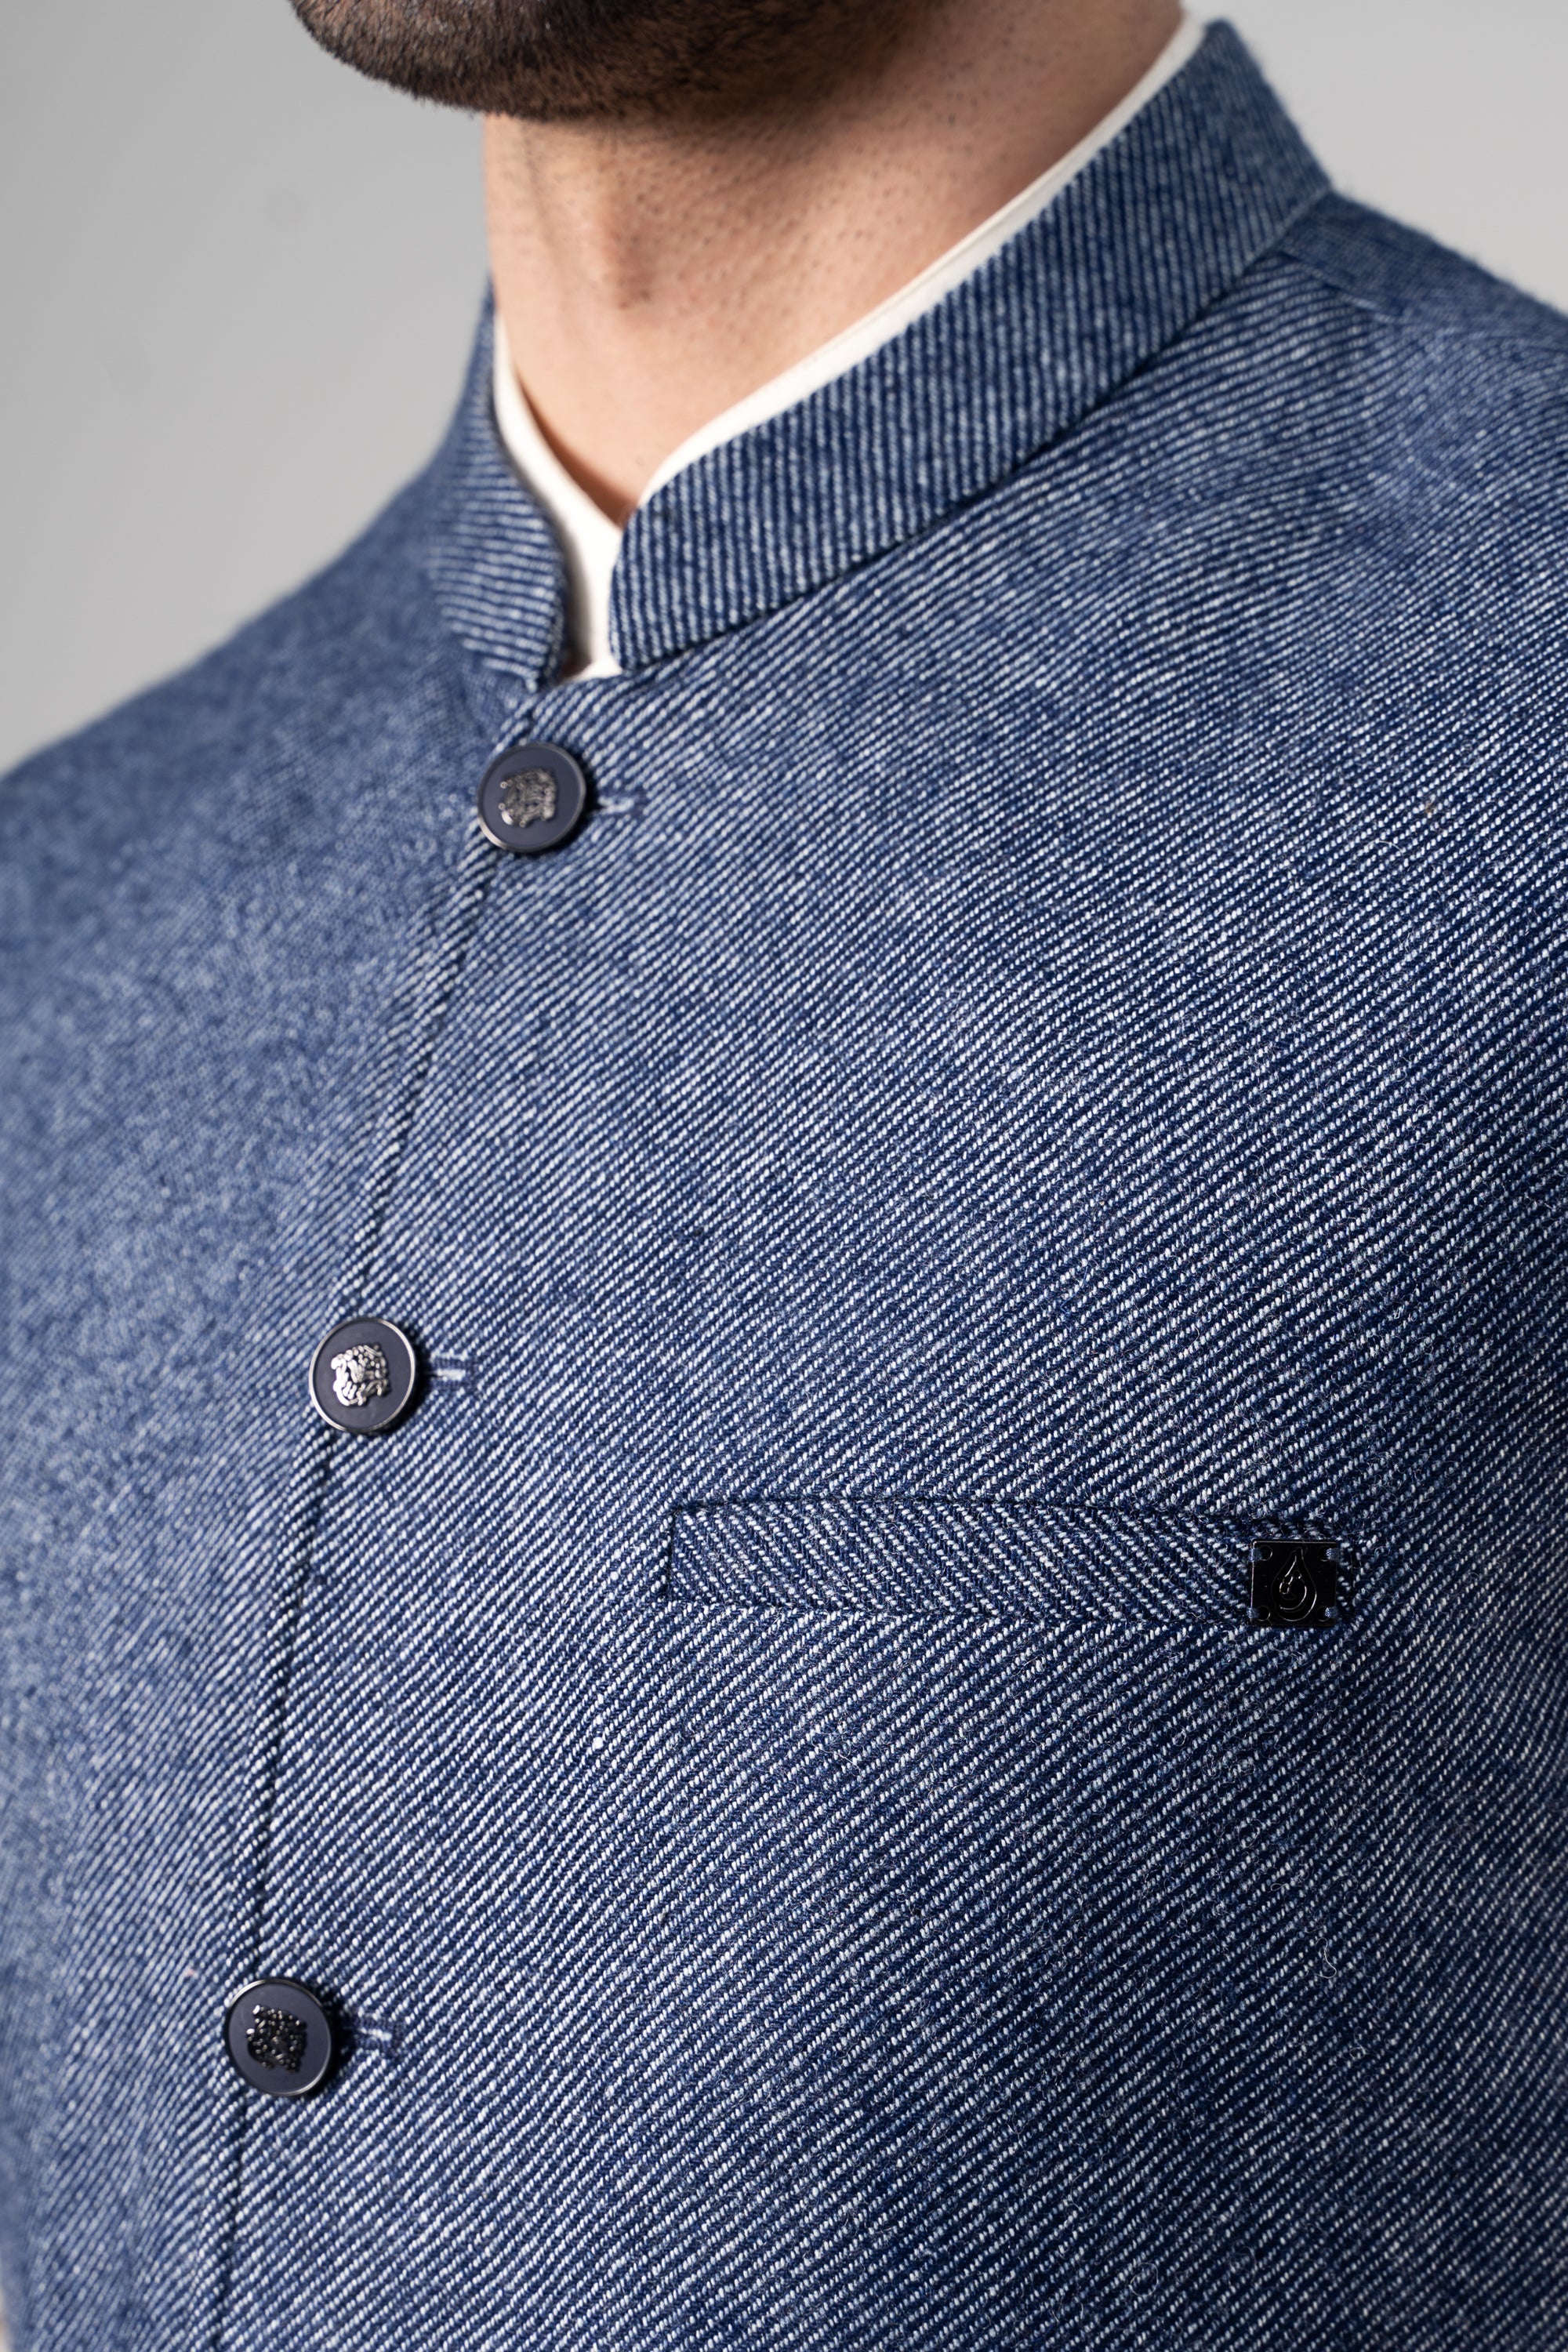 Textured Woolen Waistcoat - SIGNATURE COLLECTION INDIGO BLUE